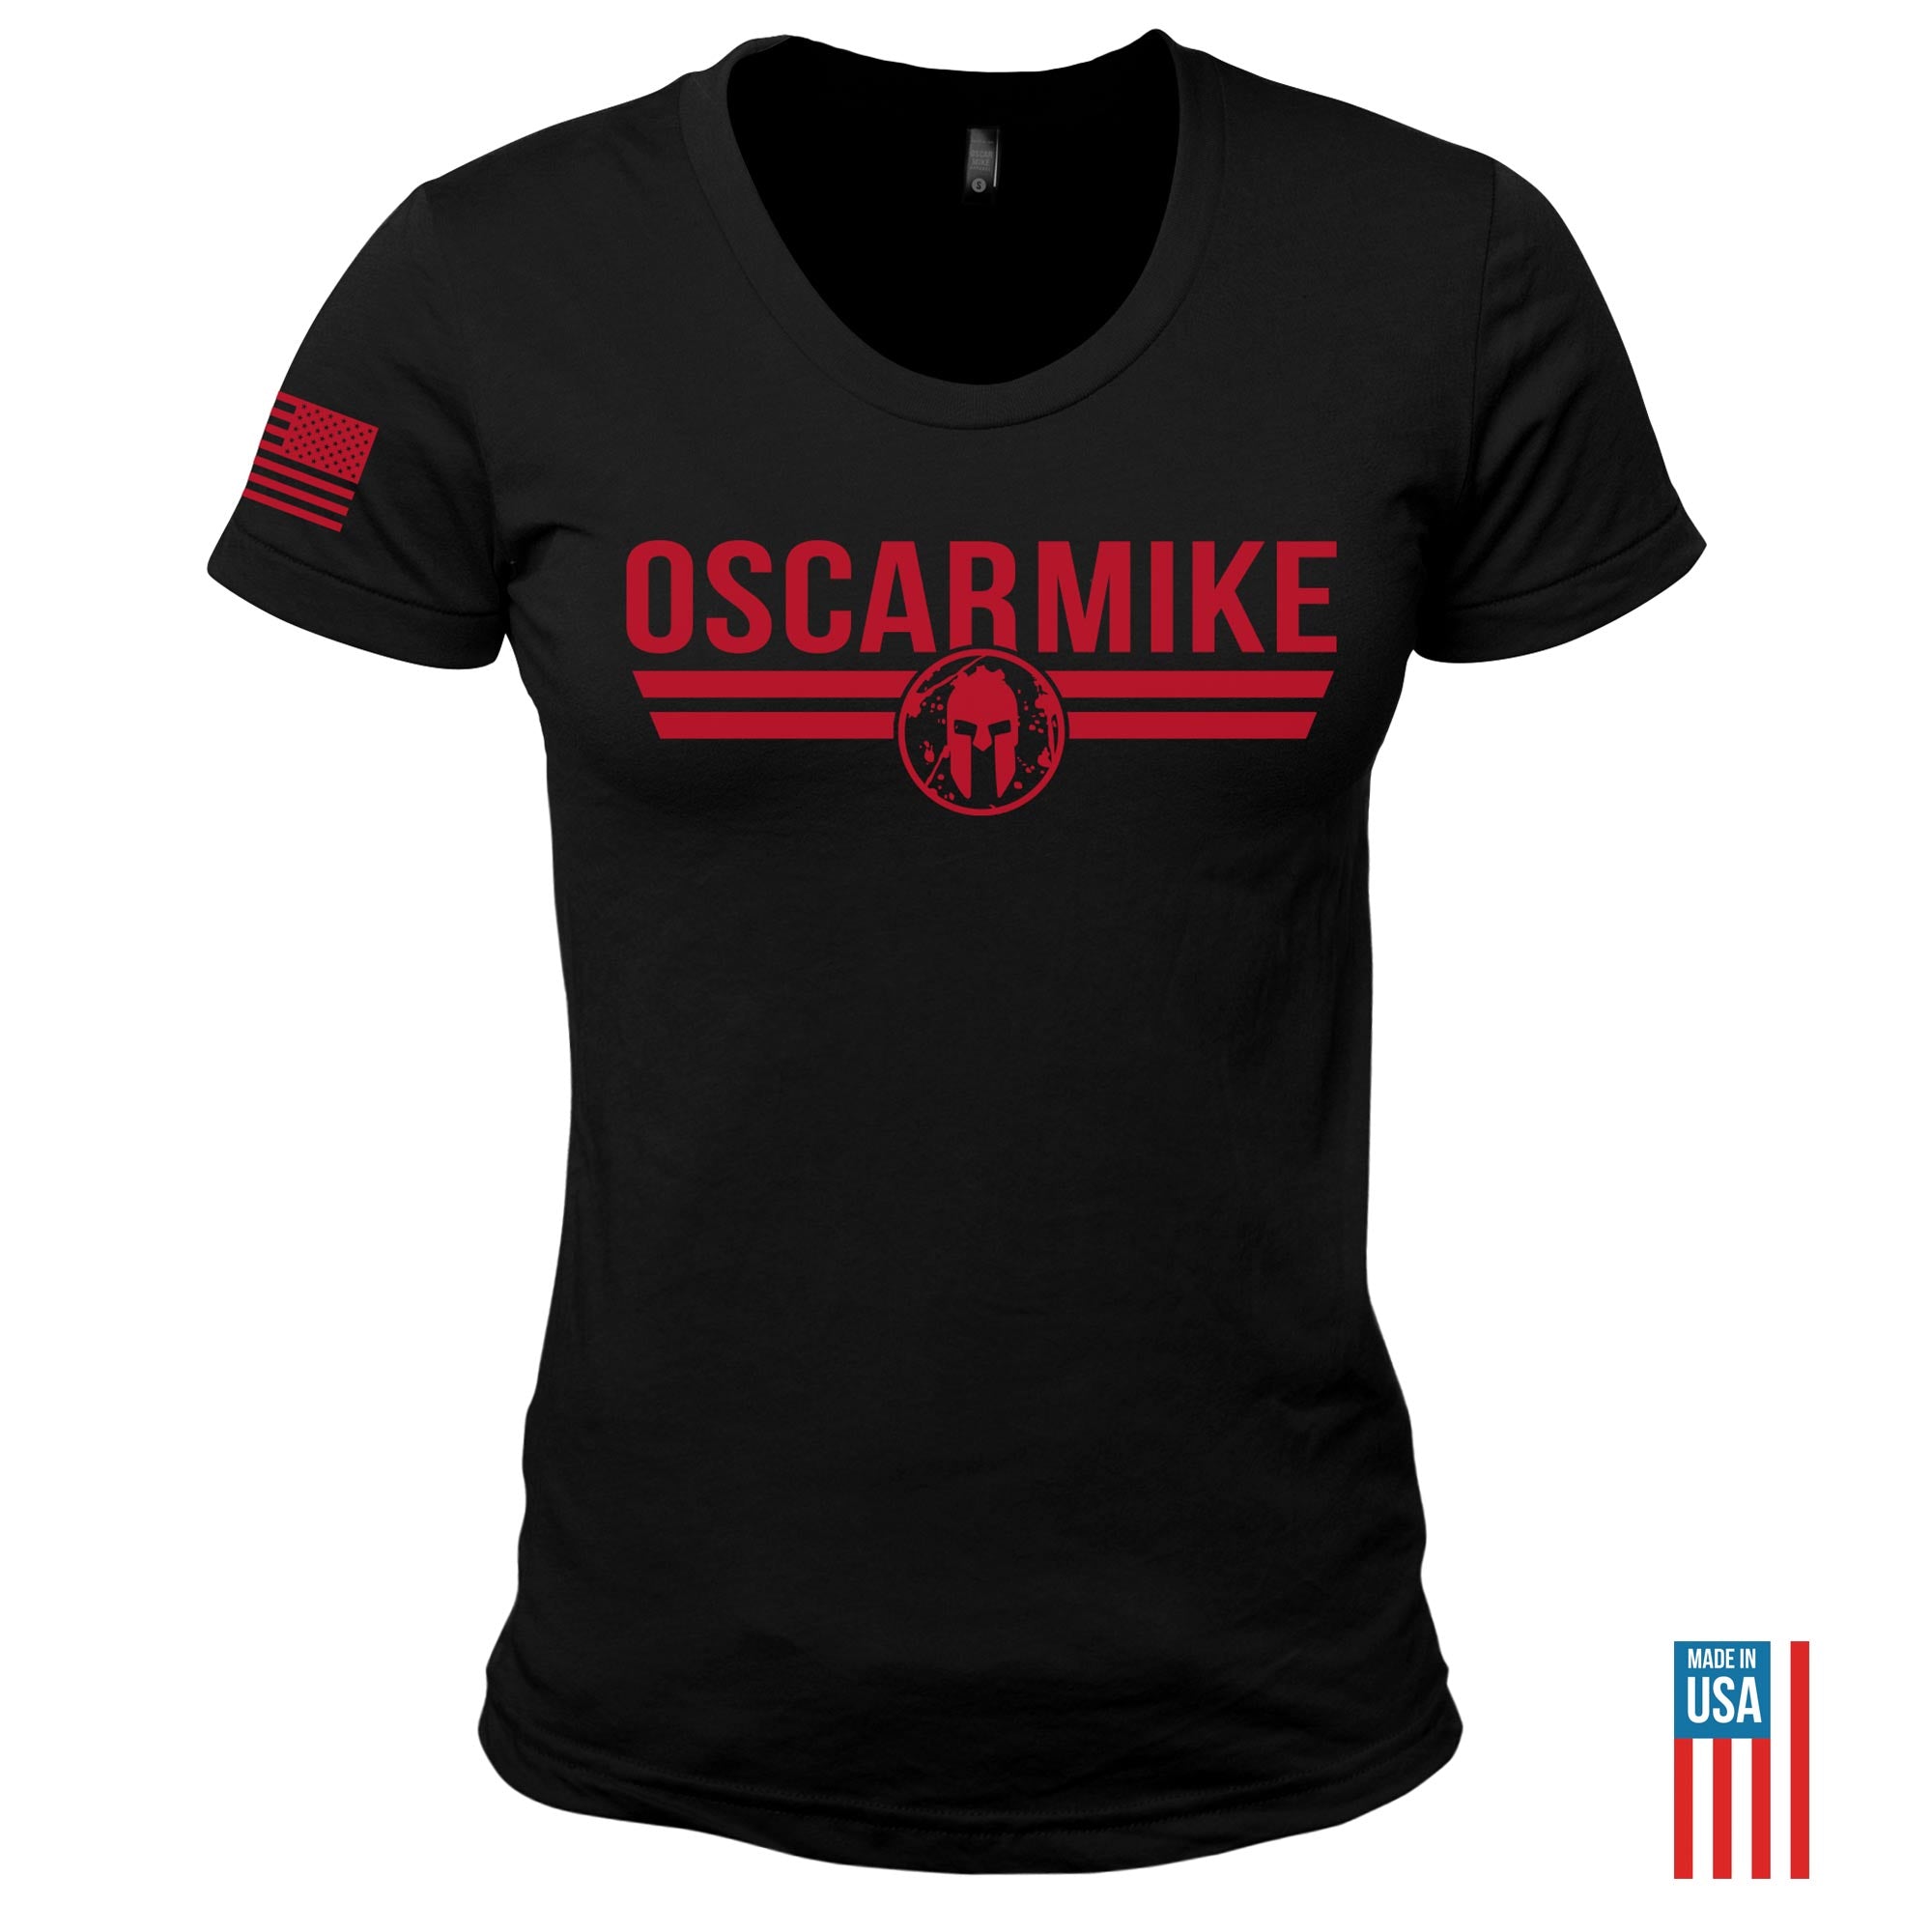 Women's OM Spartan Tee T-Shirt from Oscar Mike Apparel